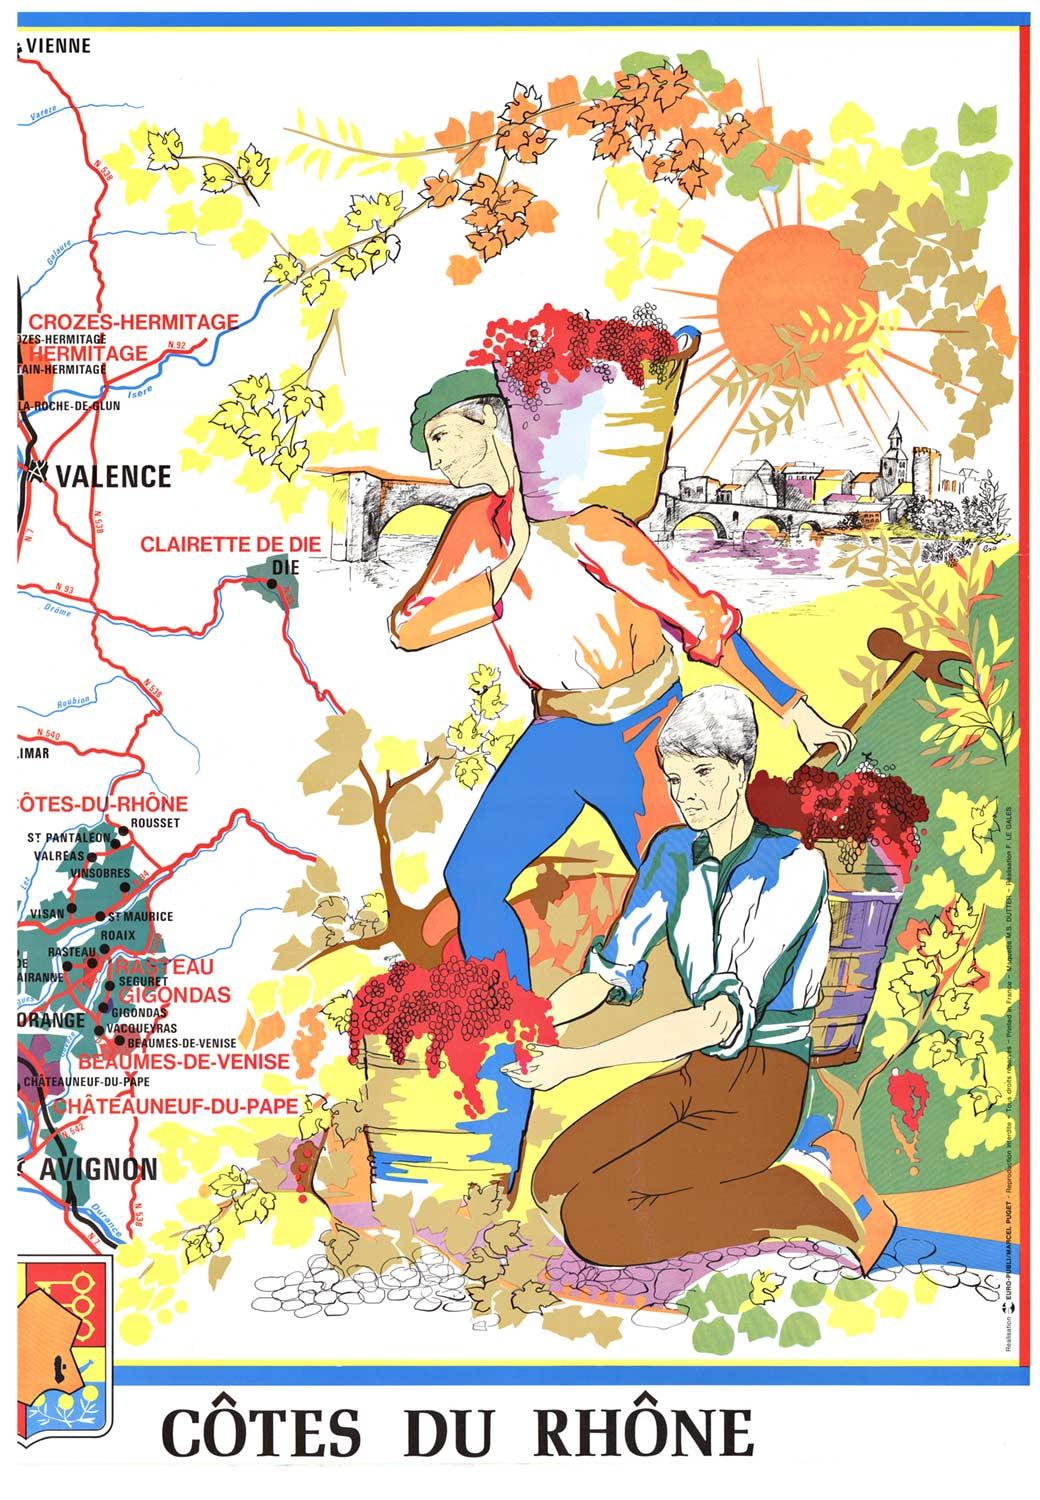 Original Vins Des Côtes du Rhône, French Wine Map vintage poster - Print by M. S. Dutter